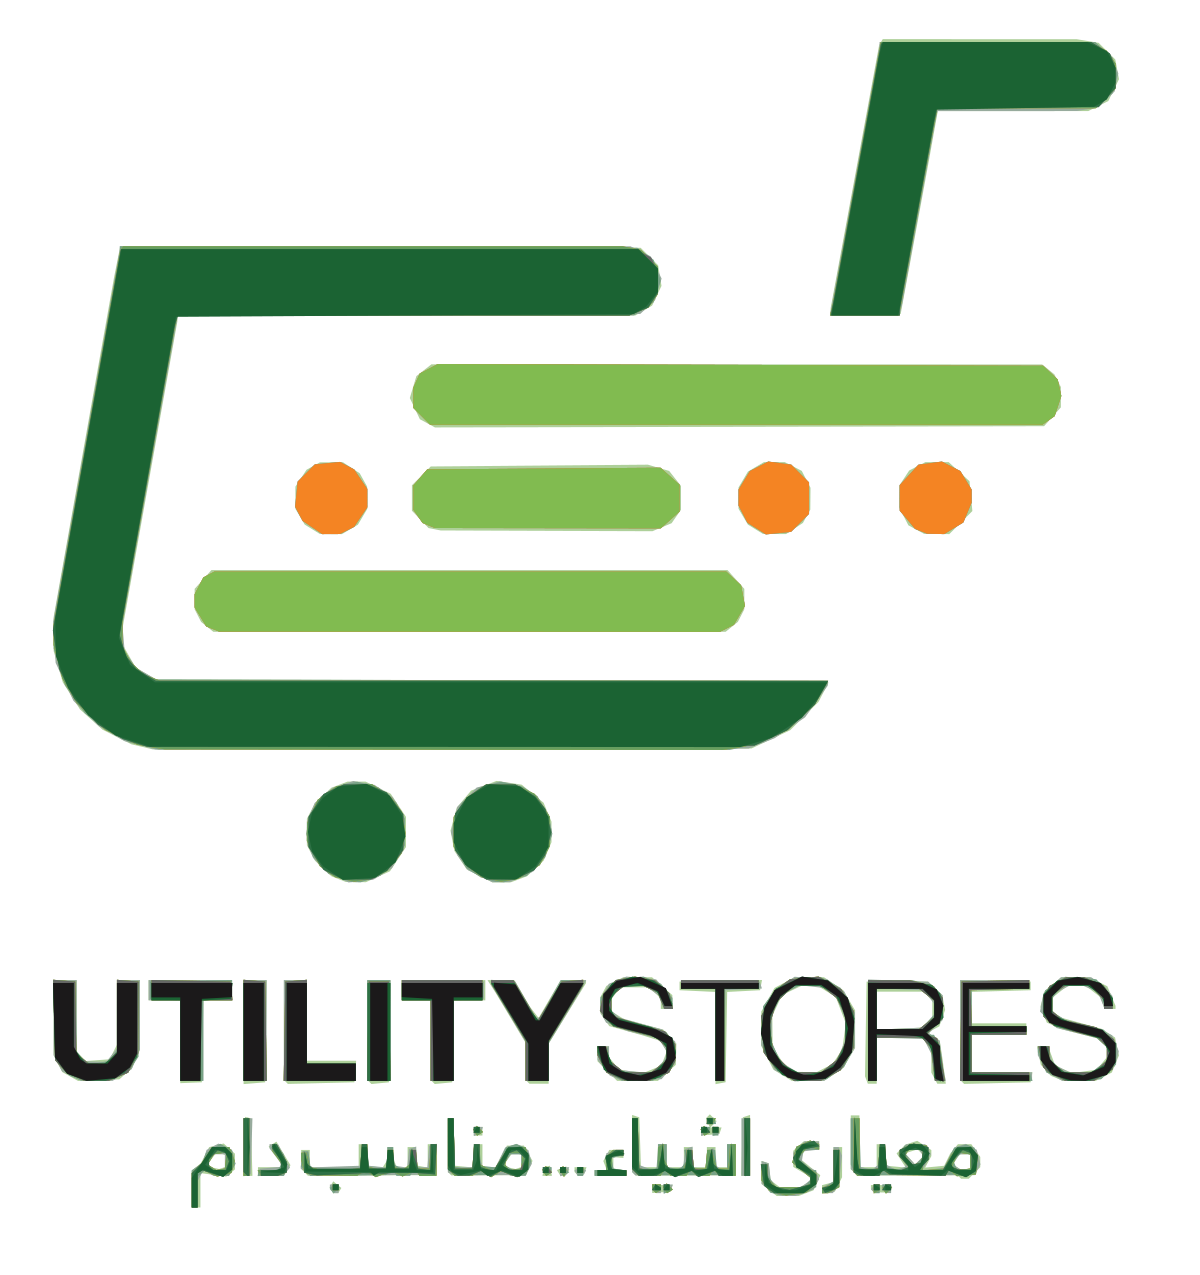 Utility Stores Corporation - Wikipedia